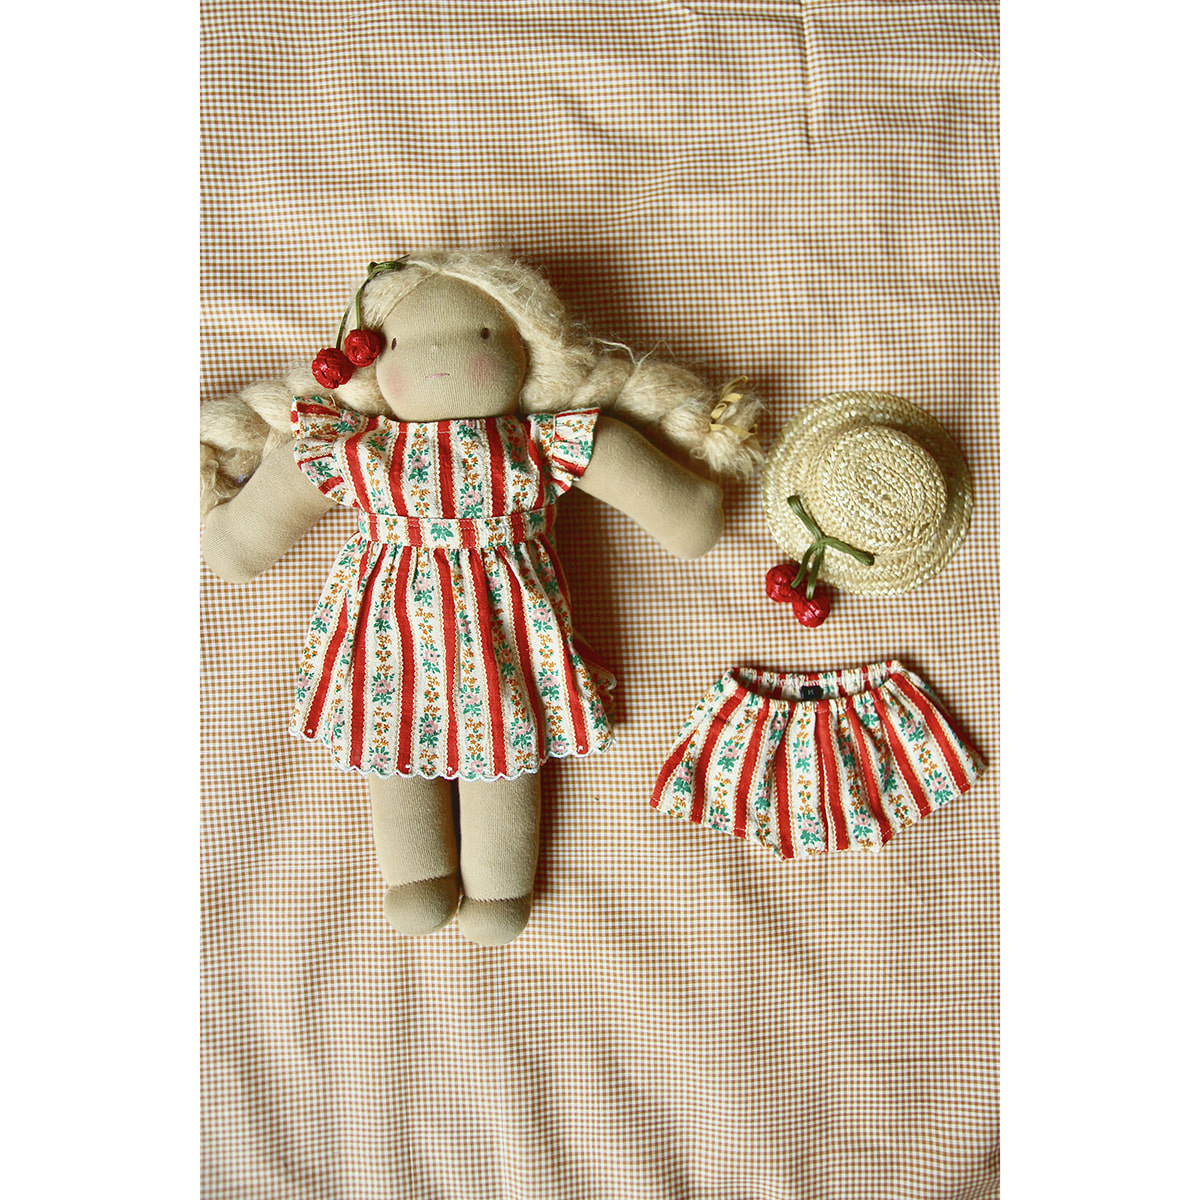 Reina doll dres with festoon embroidery / Panty (Wall paper stripe print slub cotton)